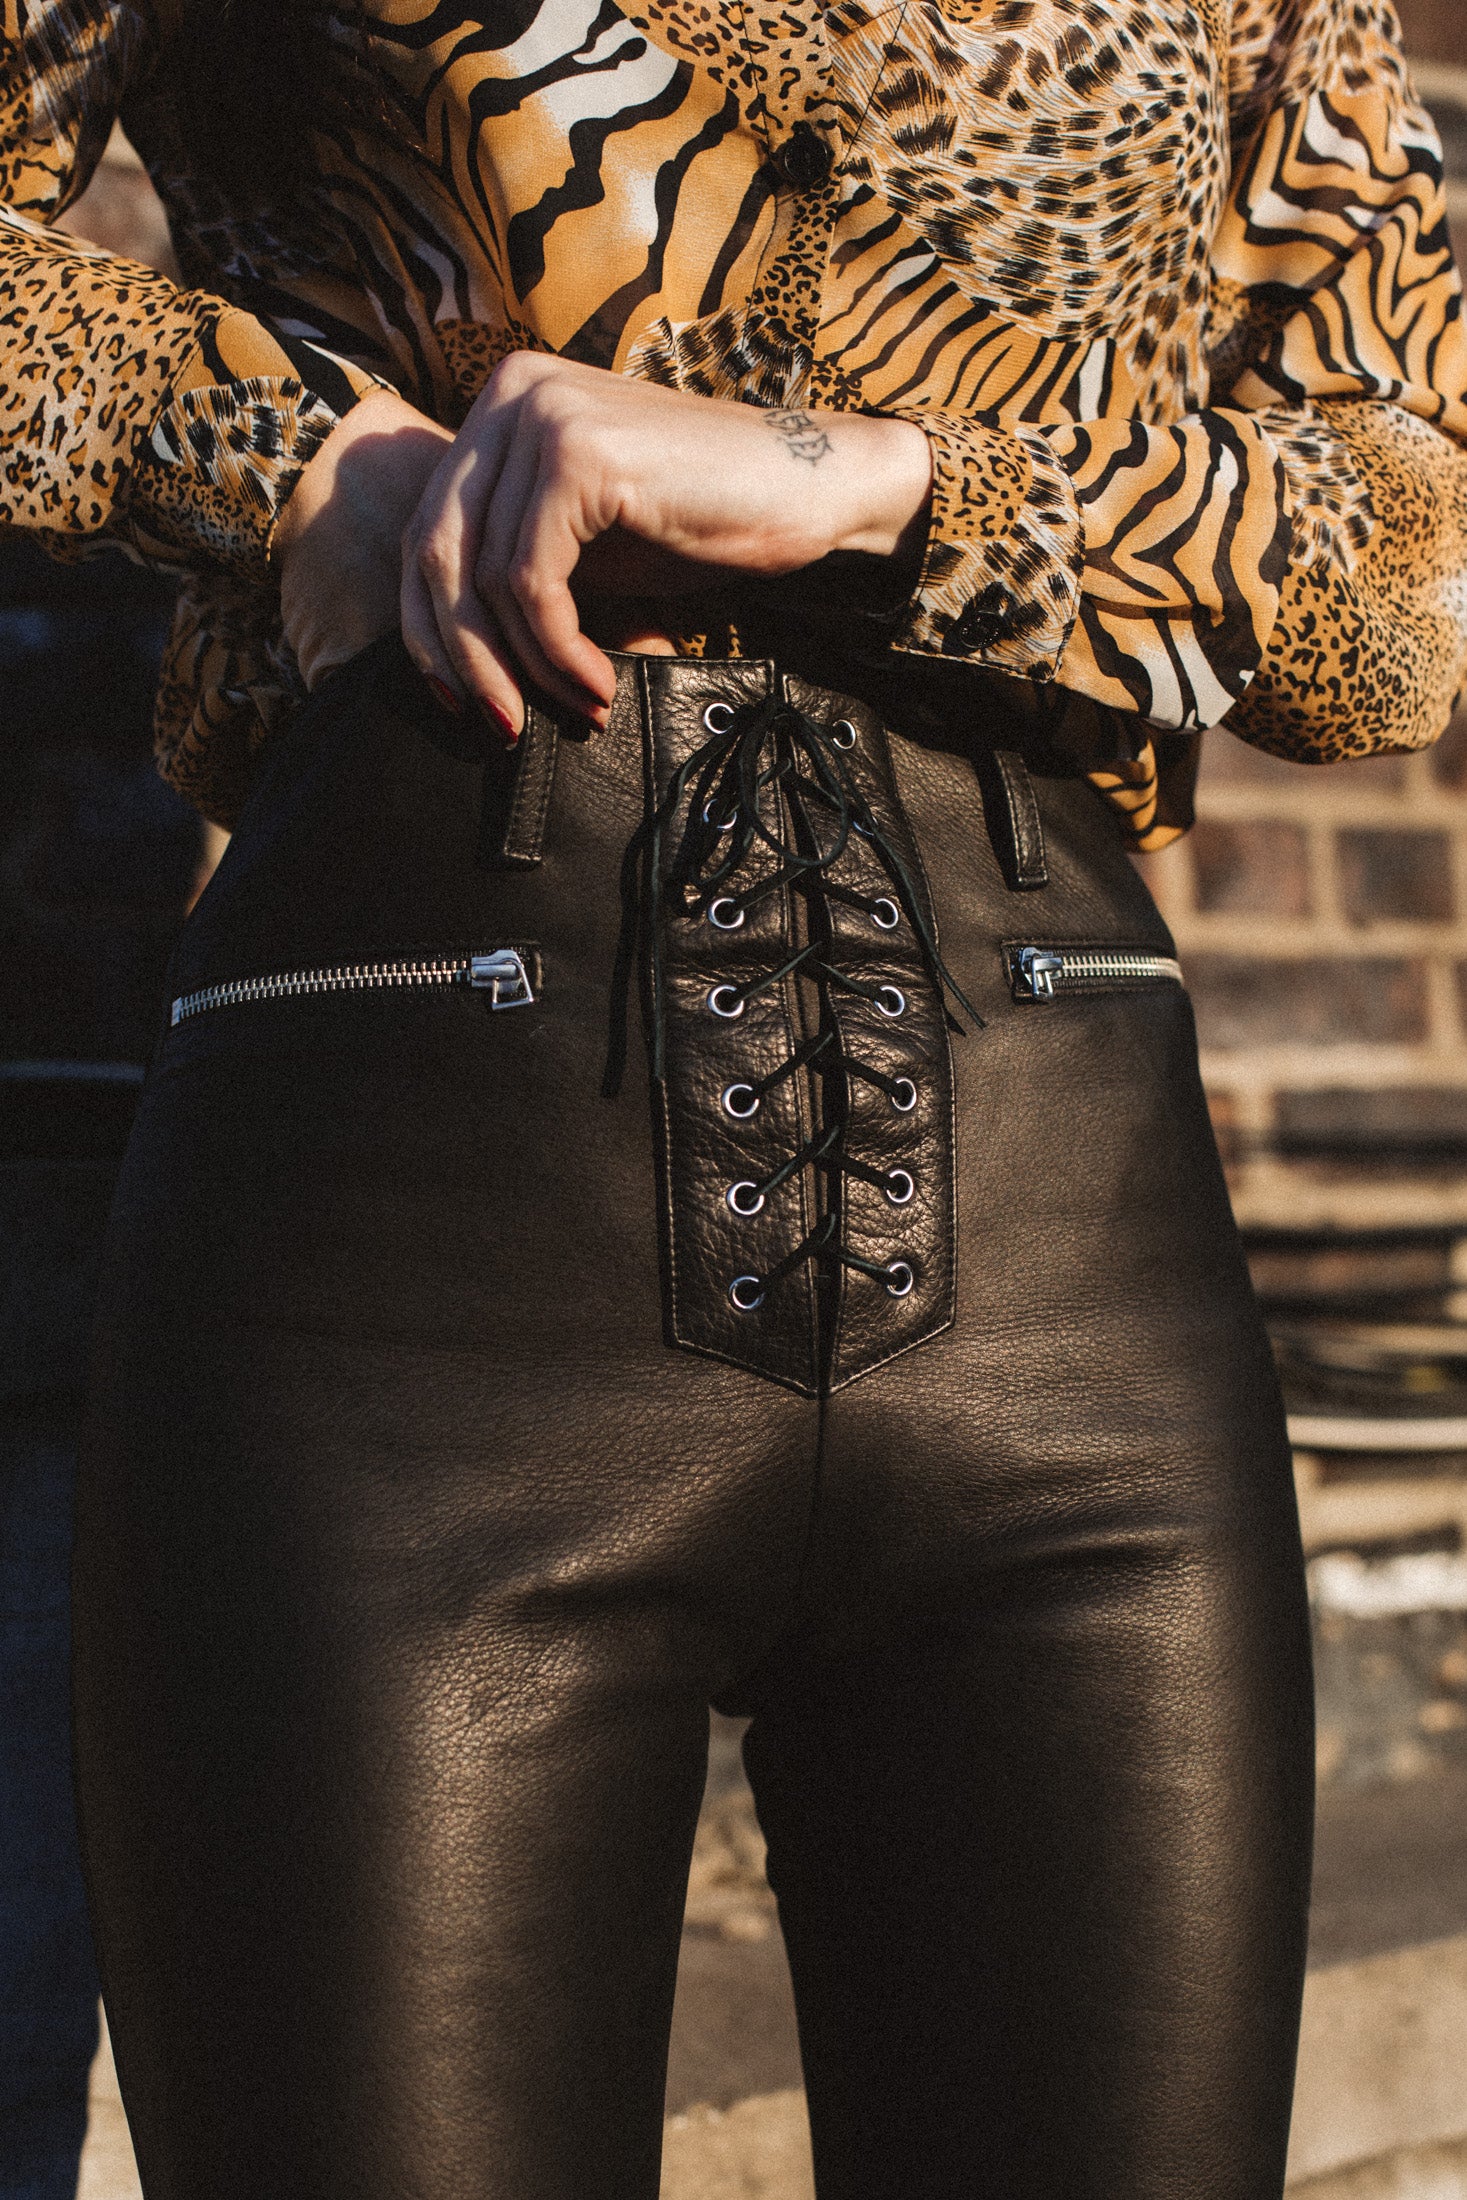 High Waisted Leather Pants